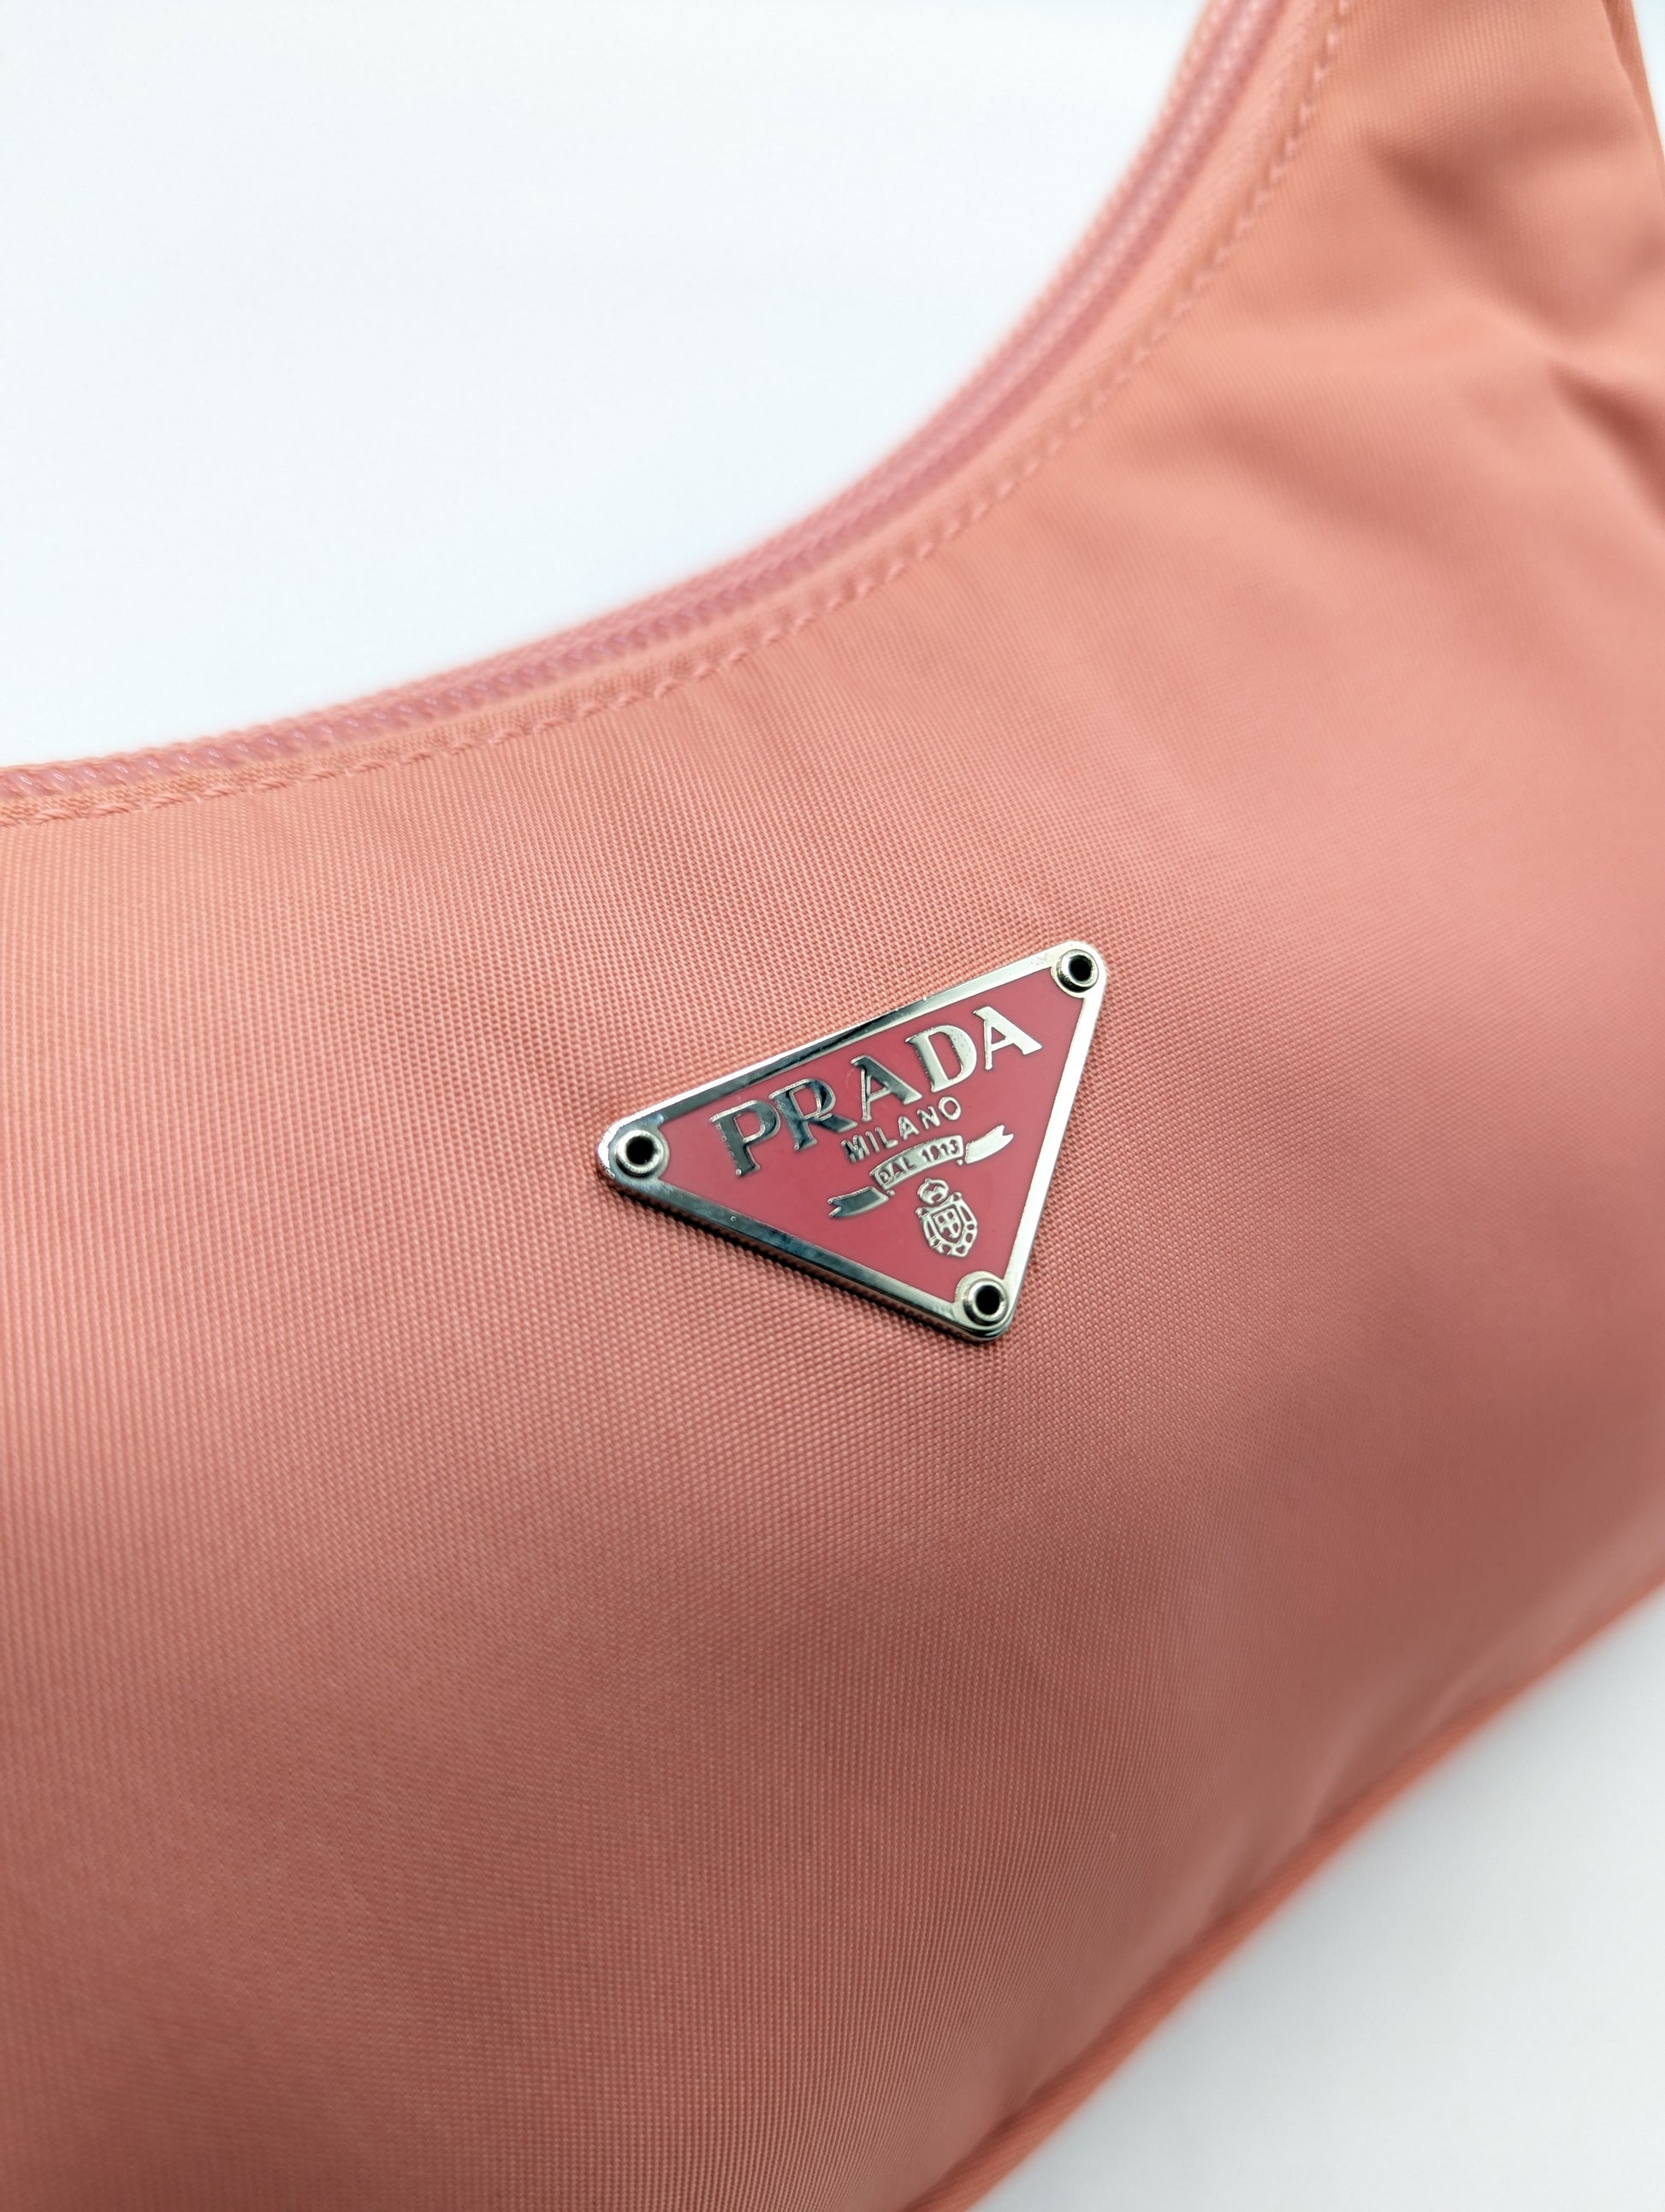 Authentic Prada Pink Solid Nylon Bag on sale at JHROP. Luxury